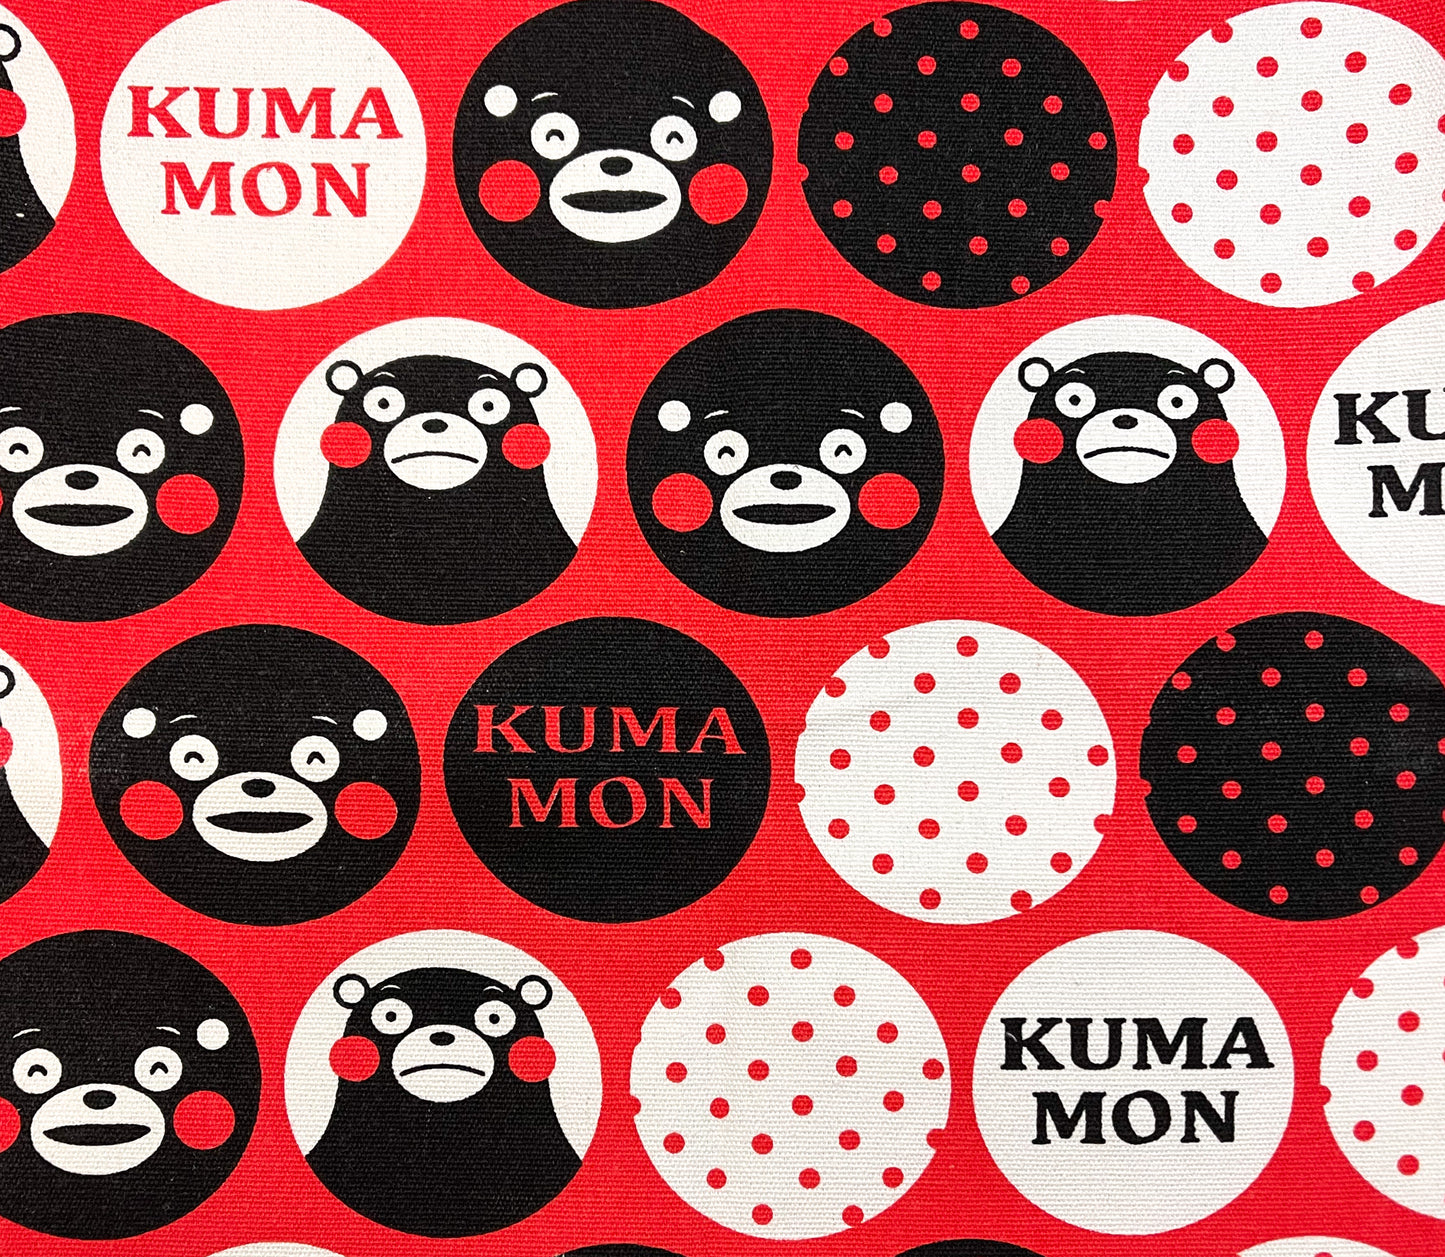 Kumamon circles 12oz canvas